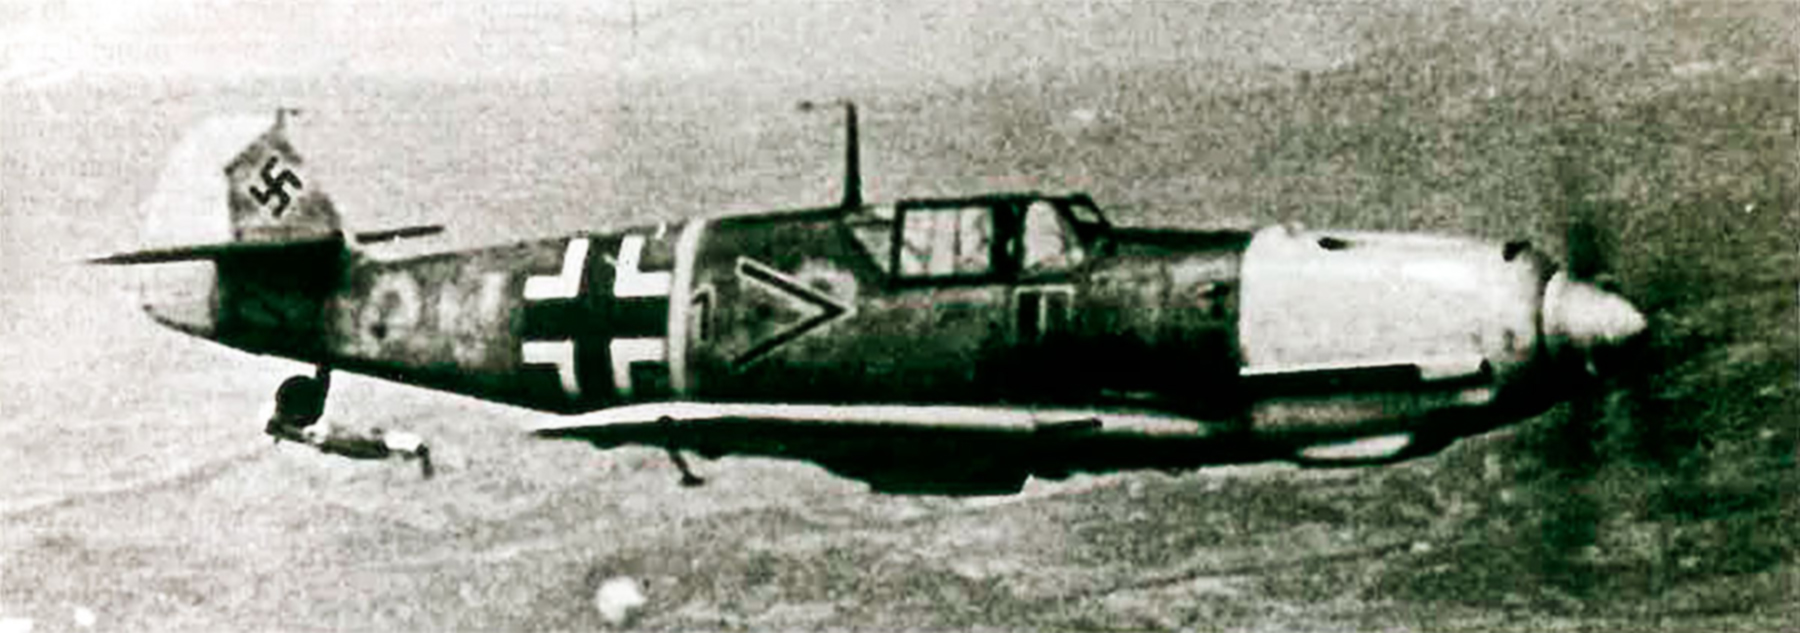 Messerschmitt Bf 109E7 Stab I.LG2 carrying the old JG52 markings 01